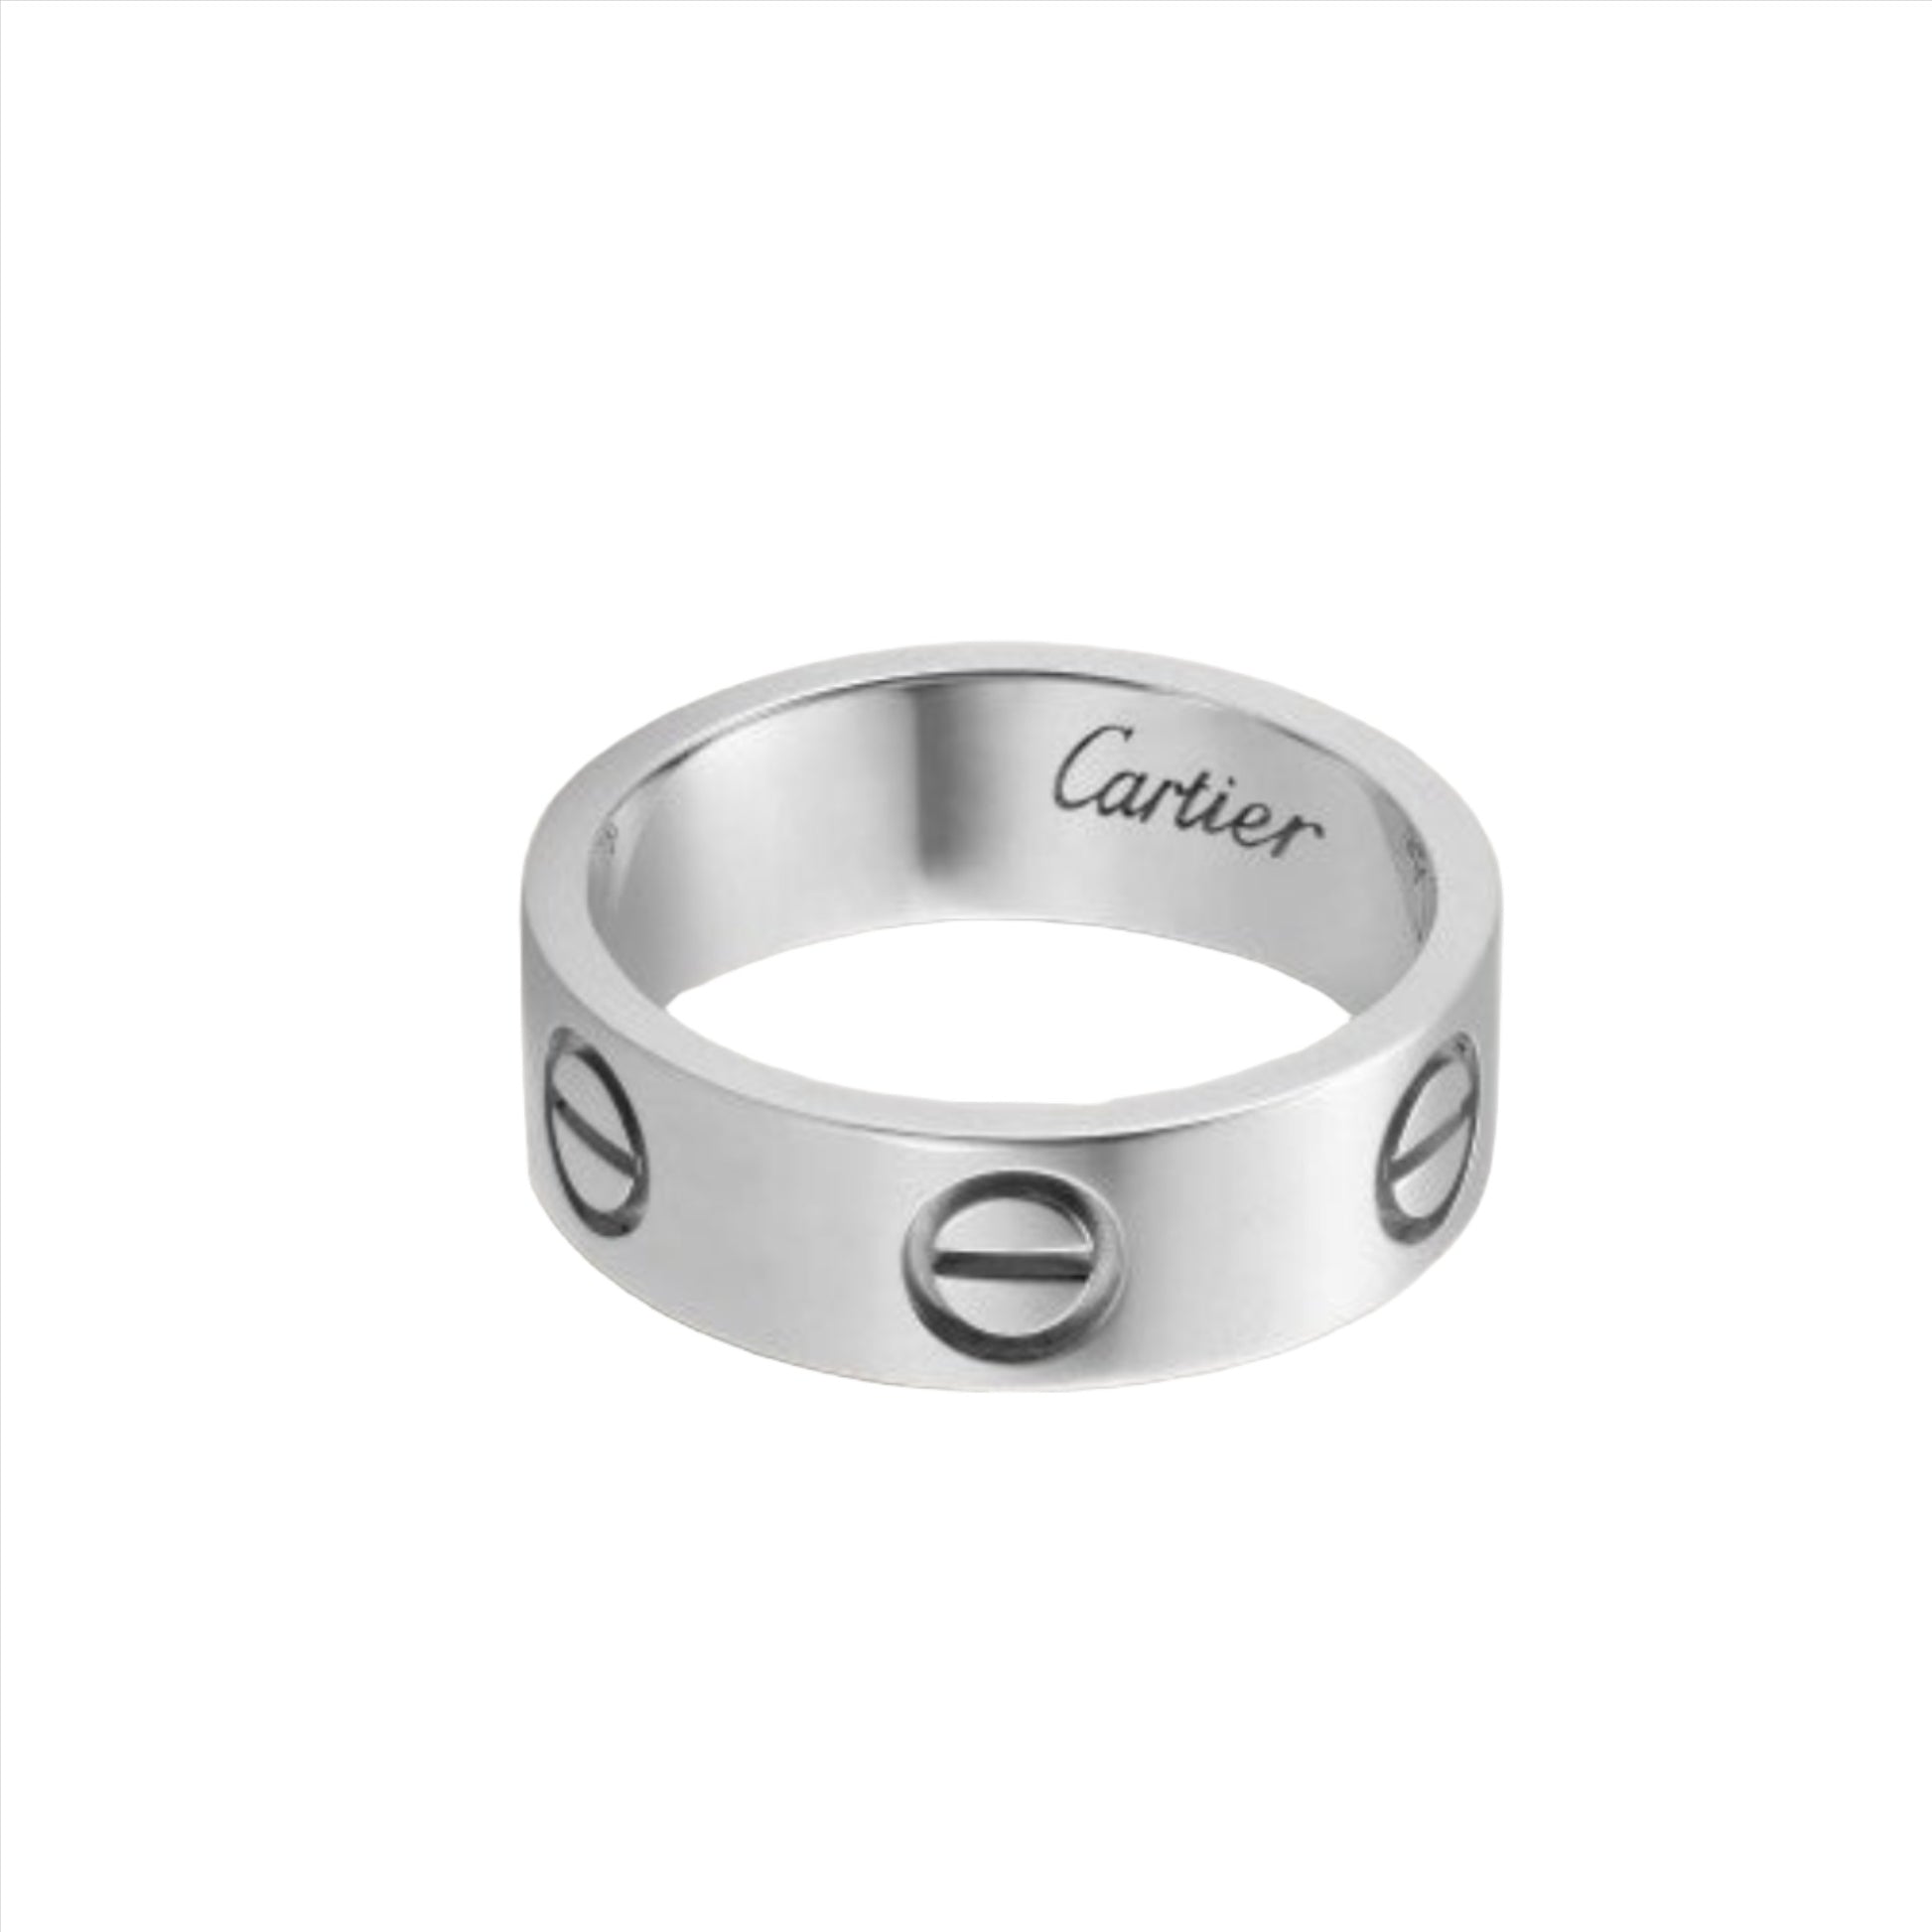 Silver cartier ring